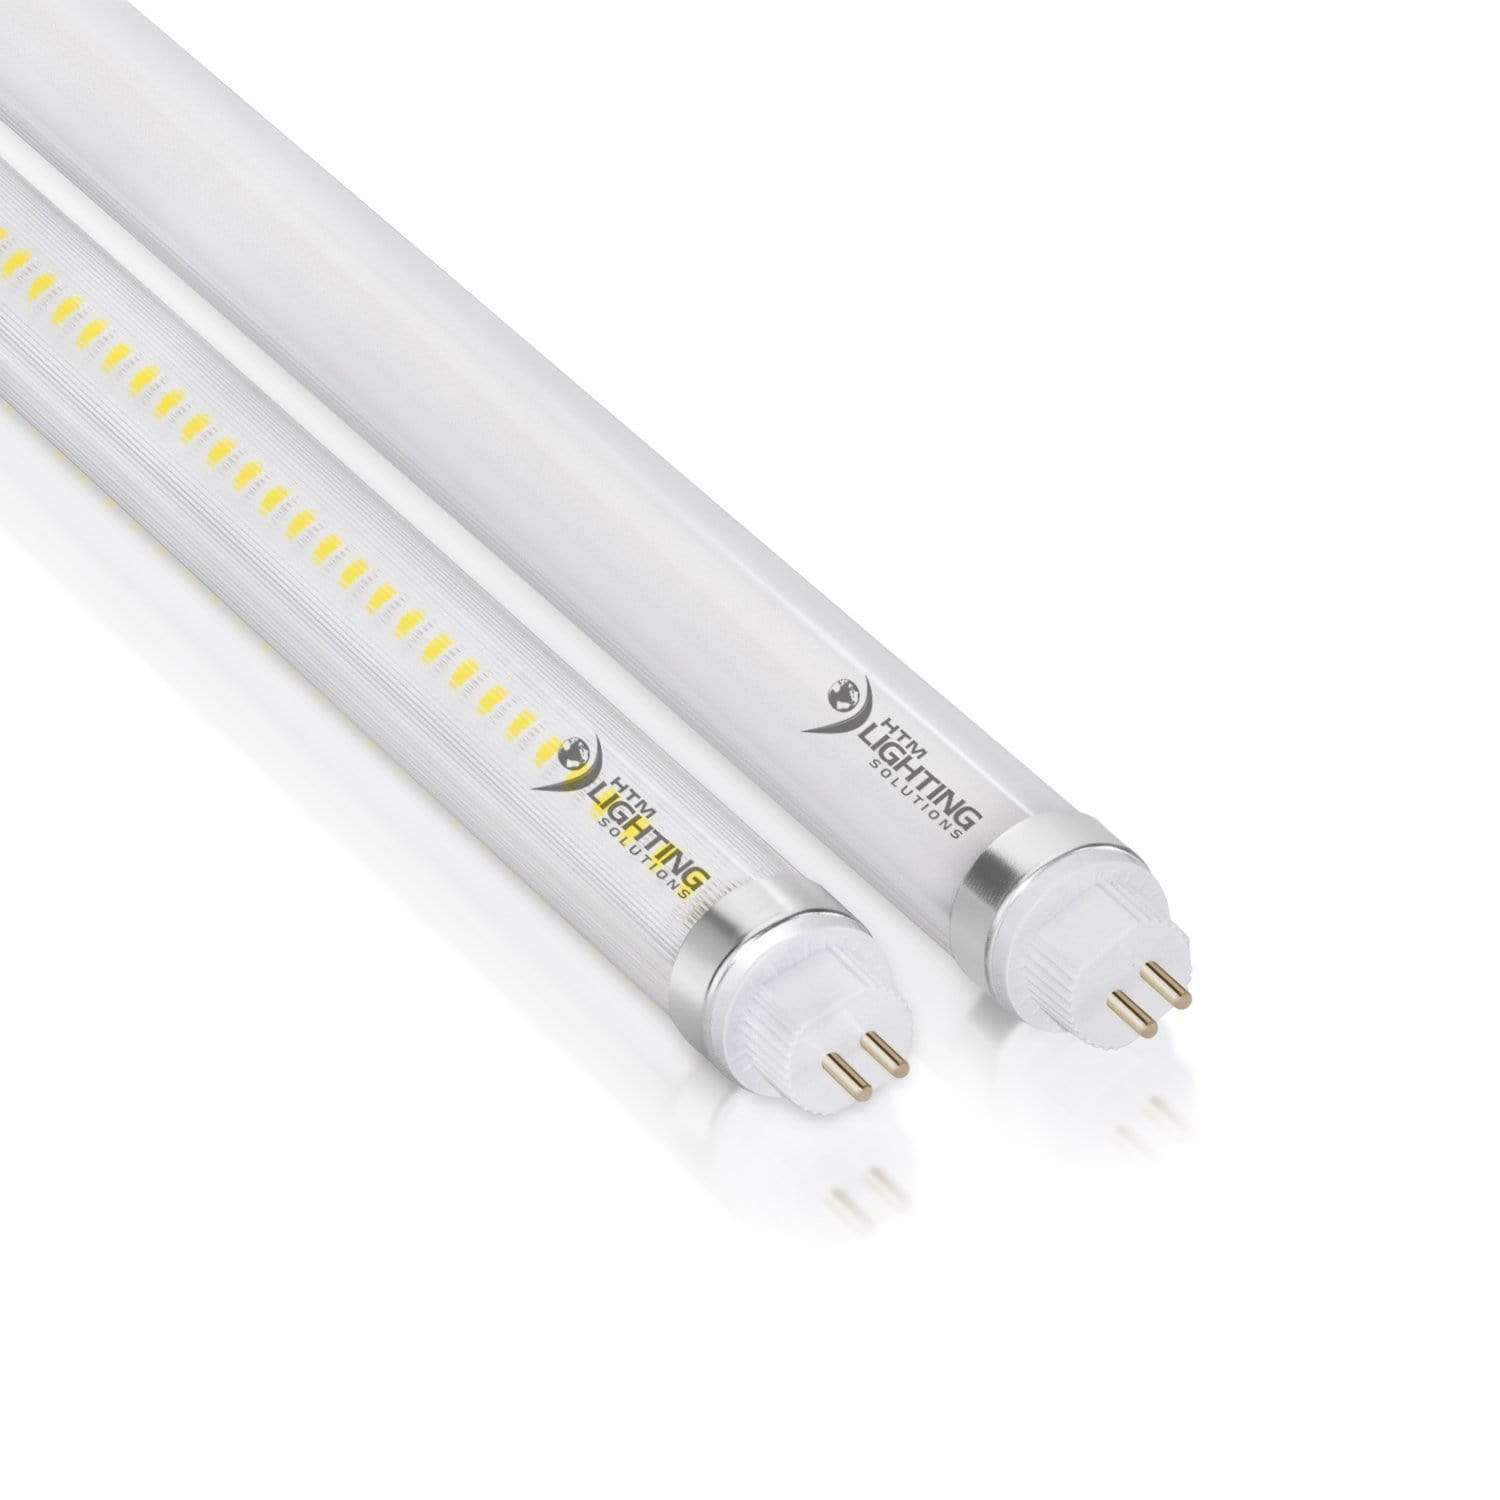 4ft t5 High Output LED Tube Light - G5 Bipin